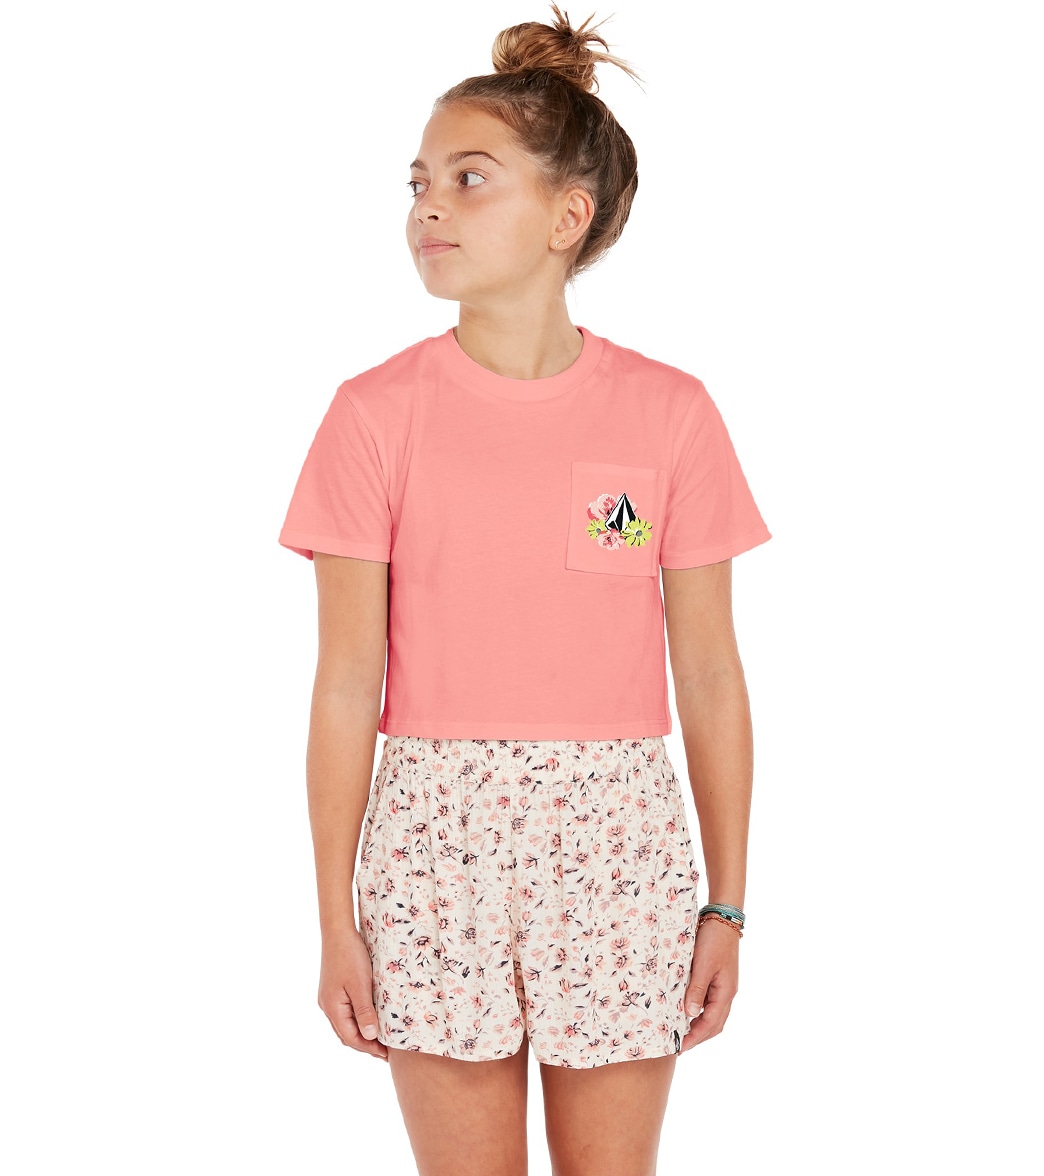 Volcom Girls' Pocket Dial Tee Shirt - Coral Haze Large Cotton/Polyester - Swimoutlet.com